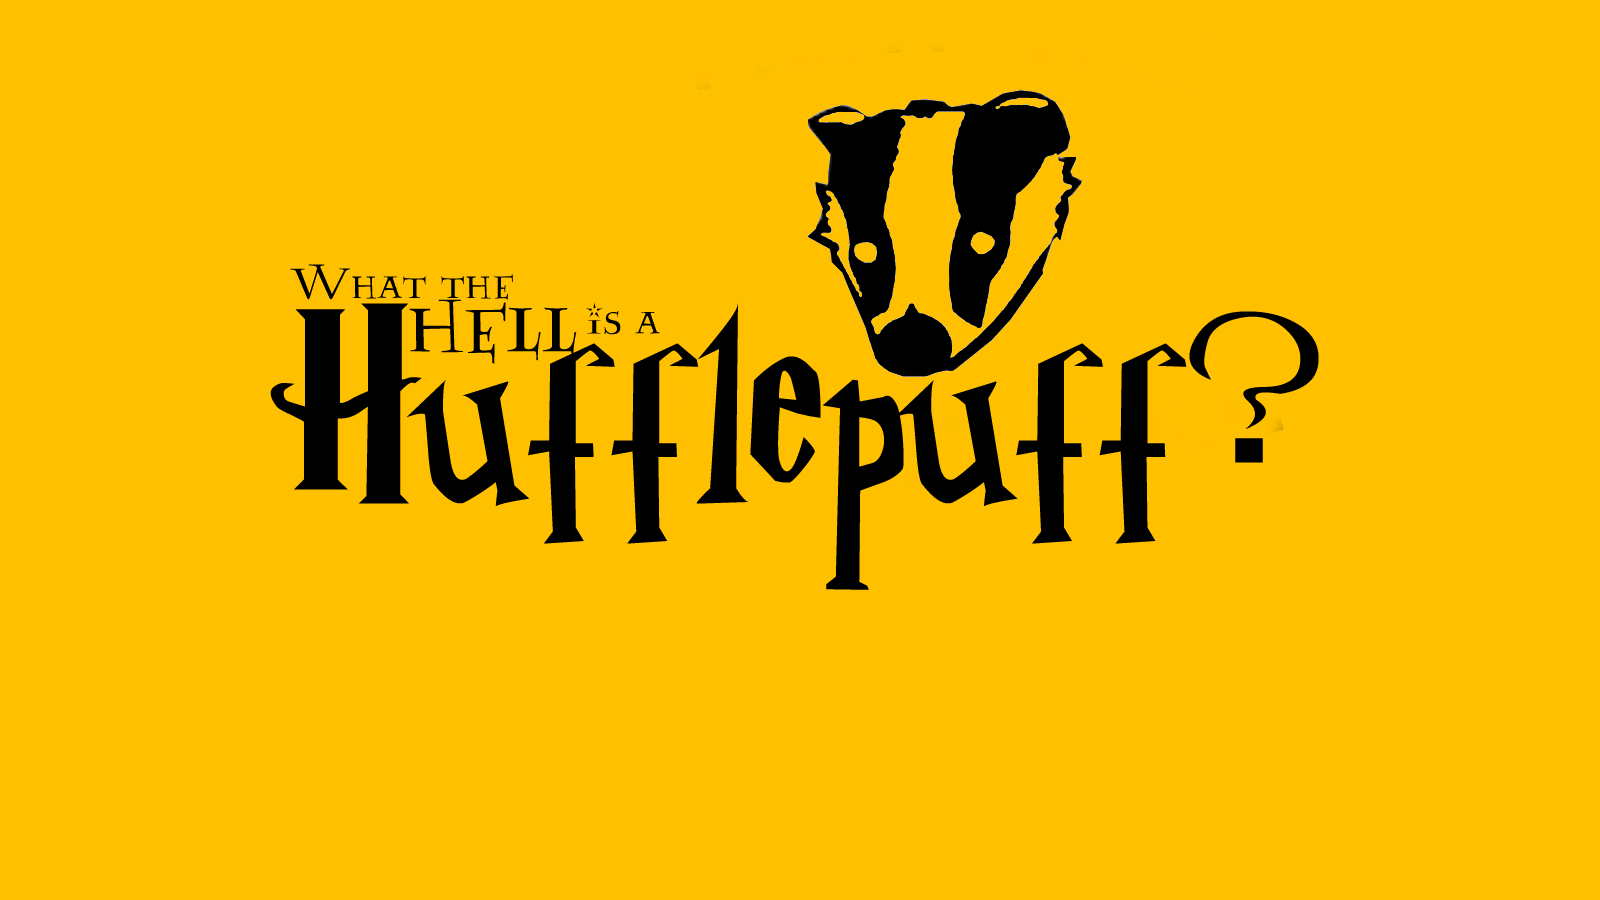 Harry Potter Hufflepuff Wallpapers - Wallpaper Cave